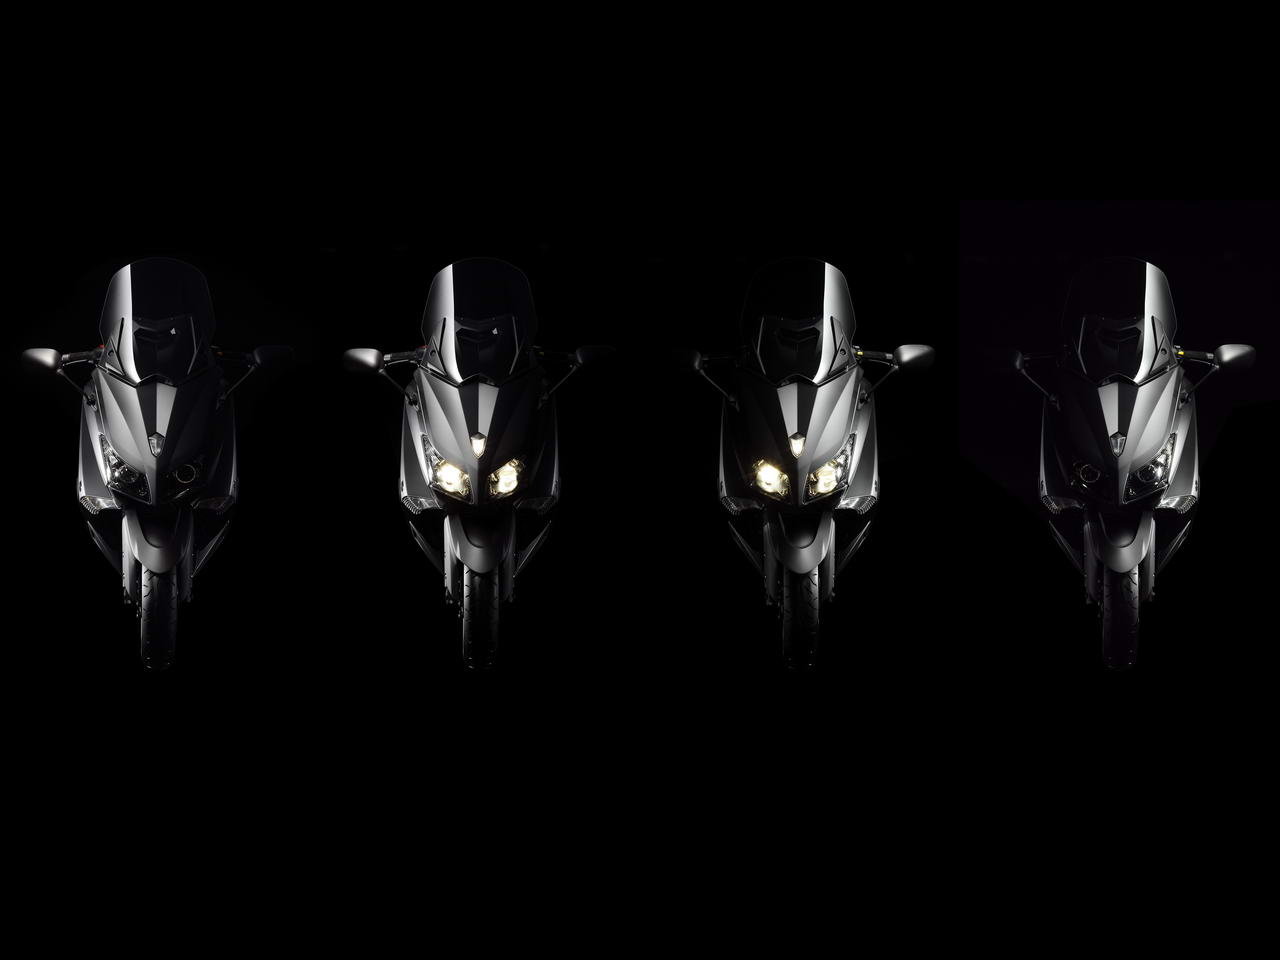 Listino Yamaha Fazer 8 ABS Sport-touring - image 15424_yamaha-tmaxabs on https://moto.motori.net